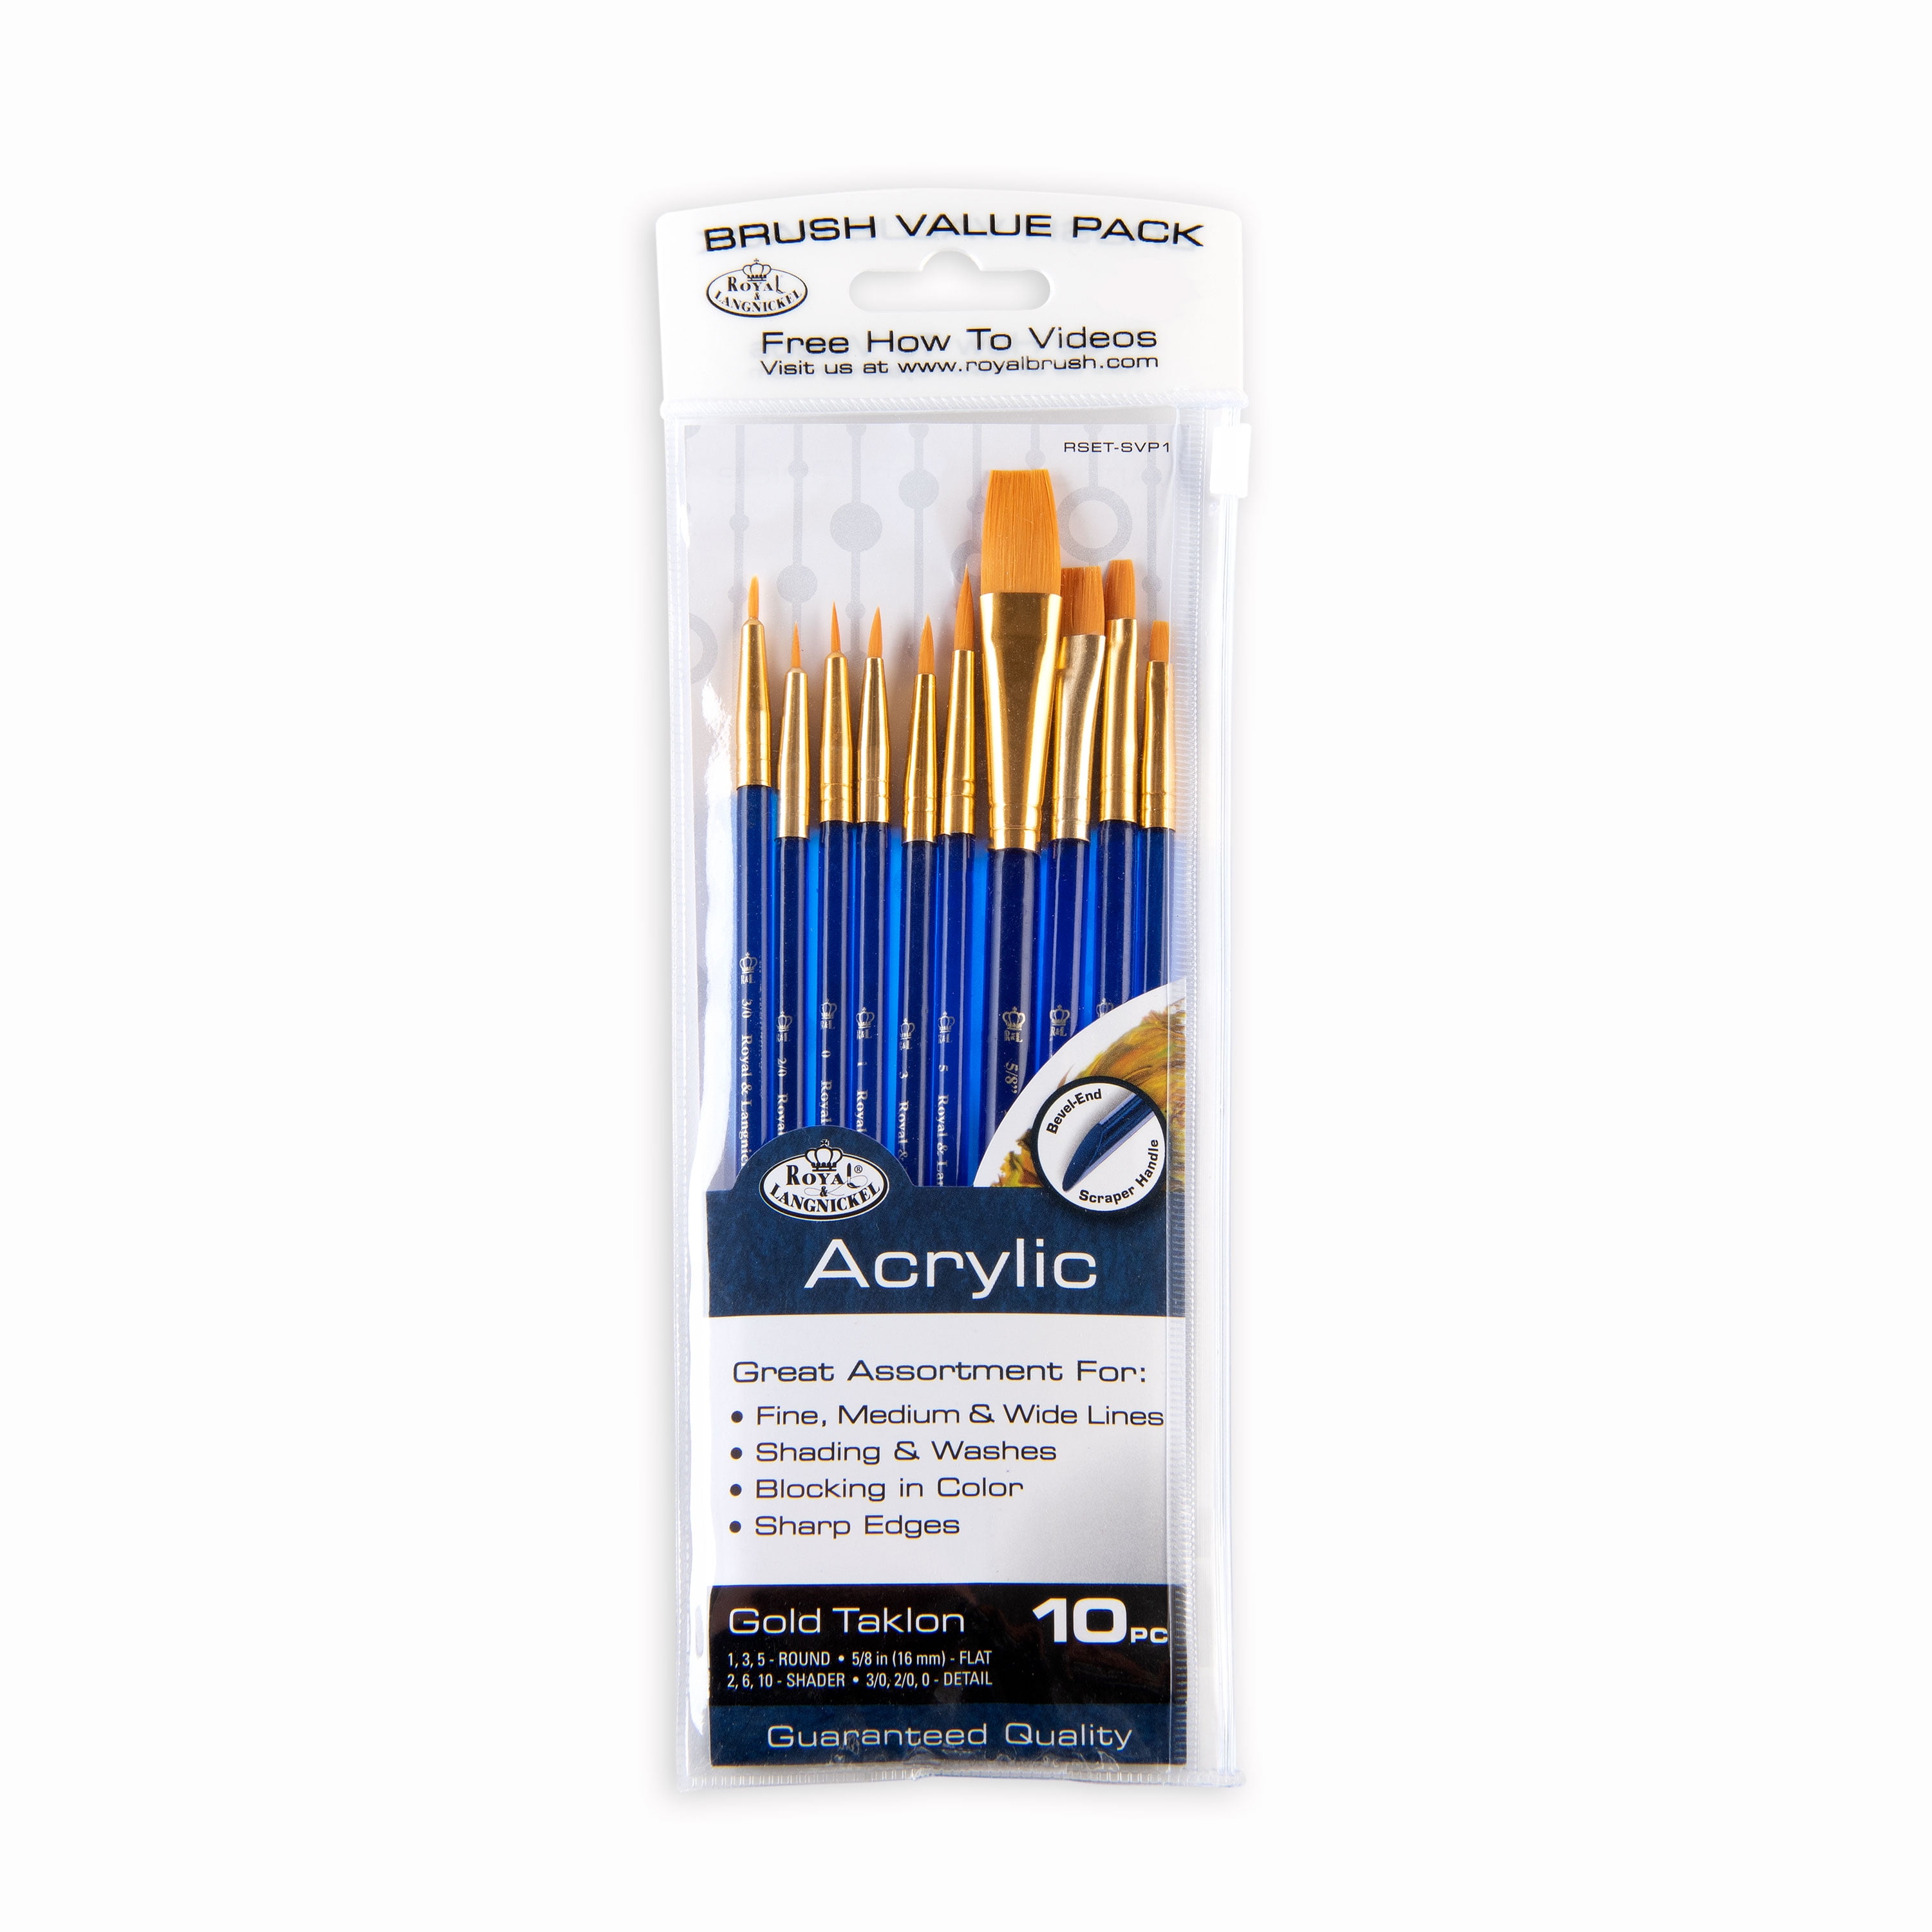 Mop ROYAL BRUSH Langnickel Gold Taklon Brush Set Value Pack